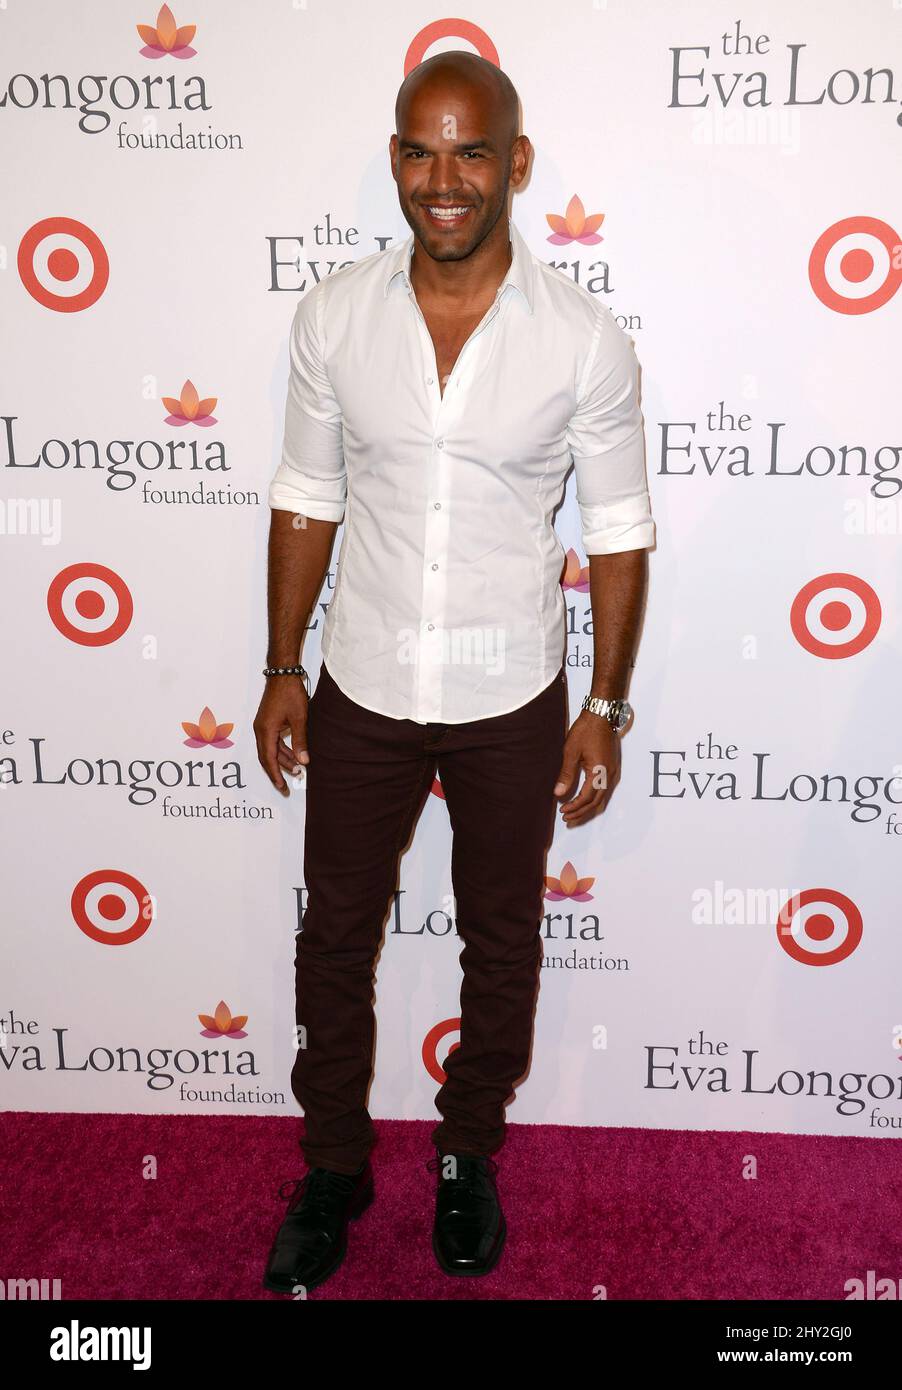 Amaury Nolasco attending the Eva Longoria Foundation Dinner at Beso in Hollywood, California. Stock Photo